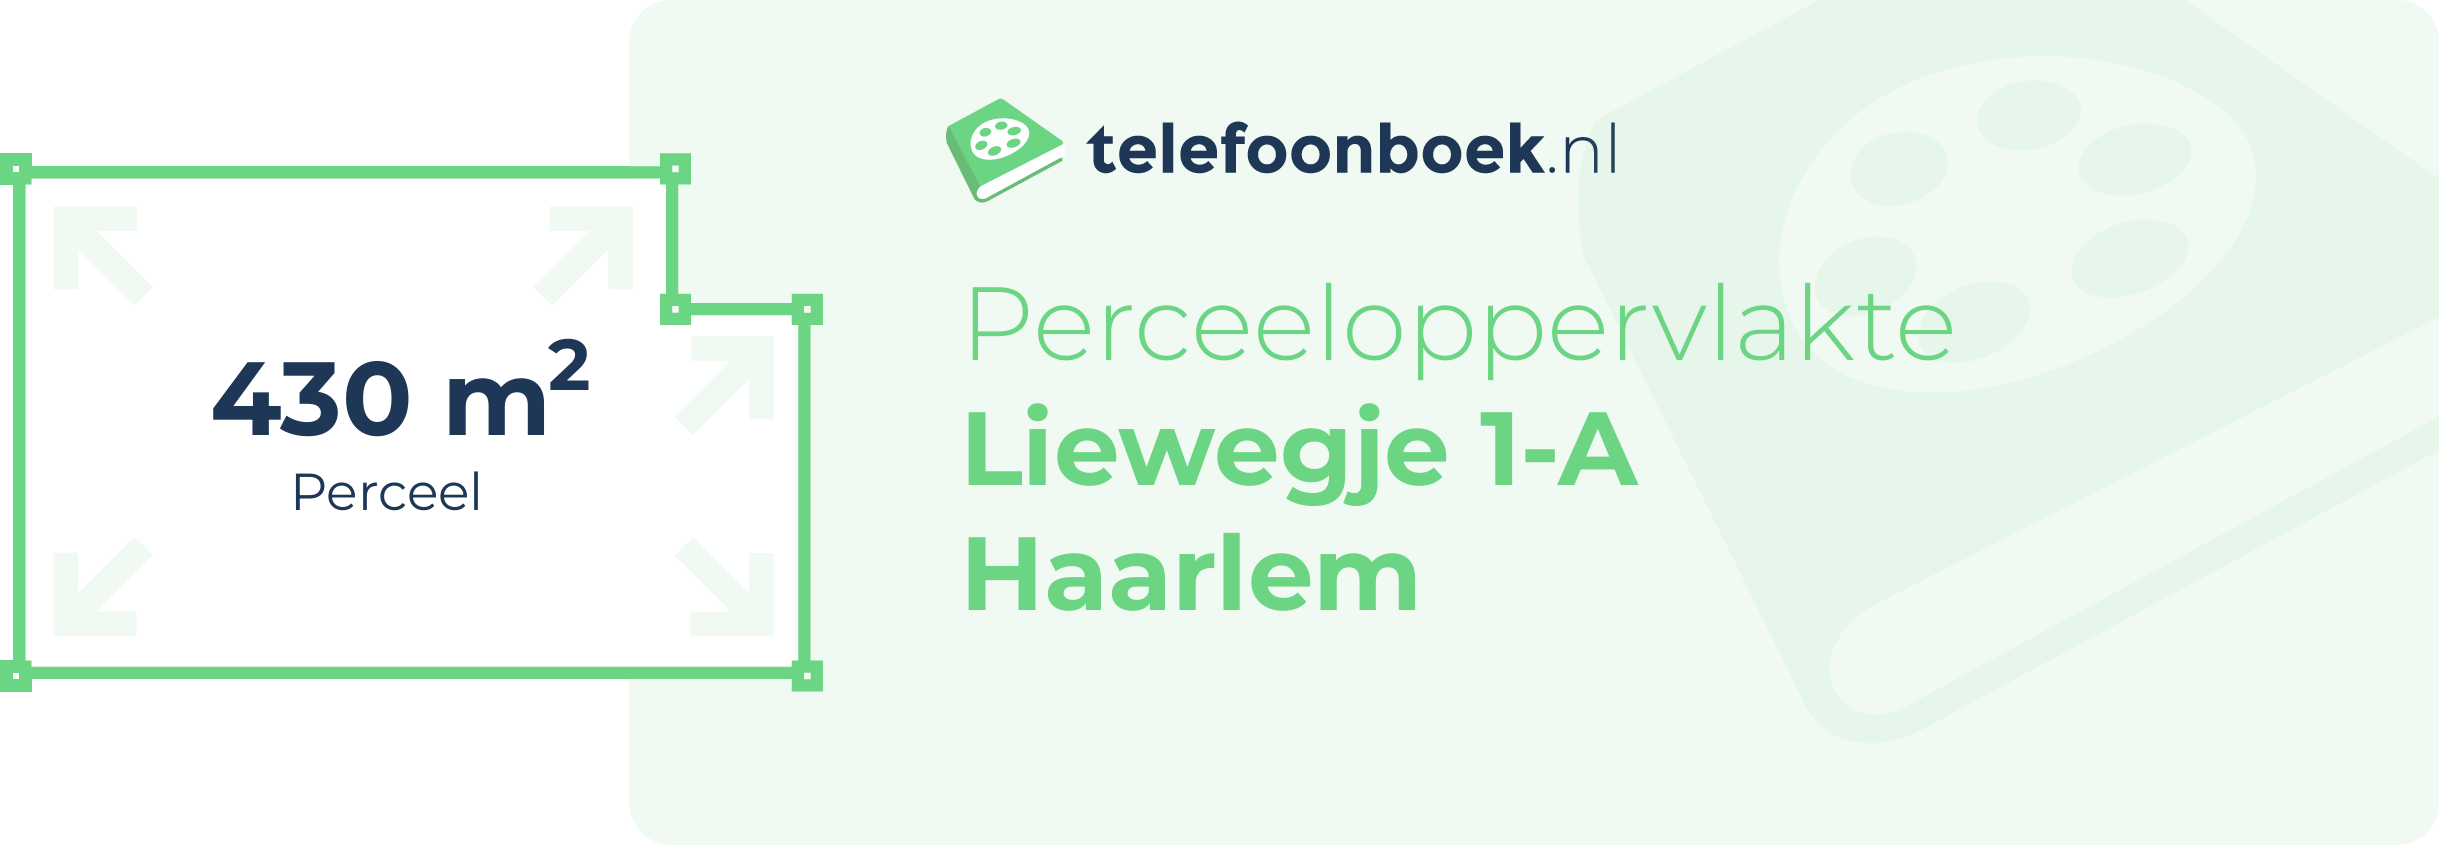 Perceeloppervlakte Liewegje 1-A Haarlem